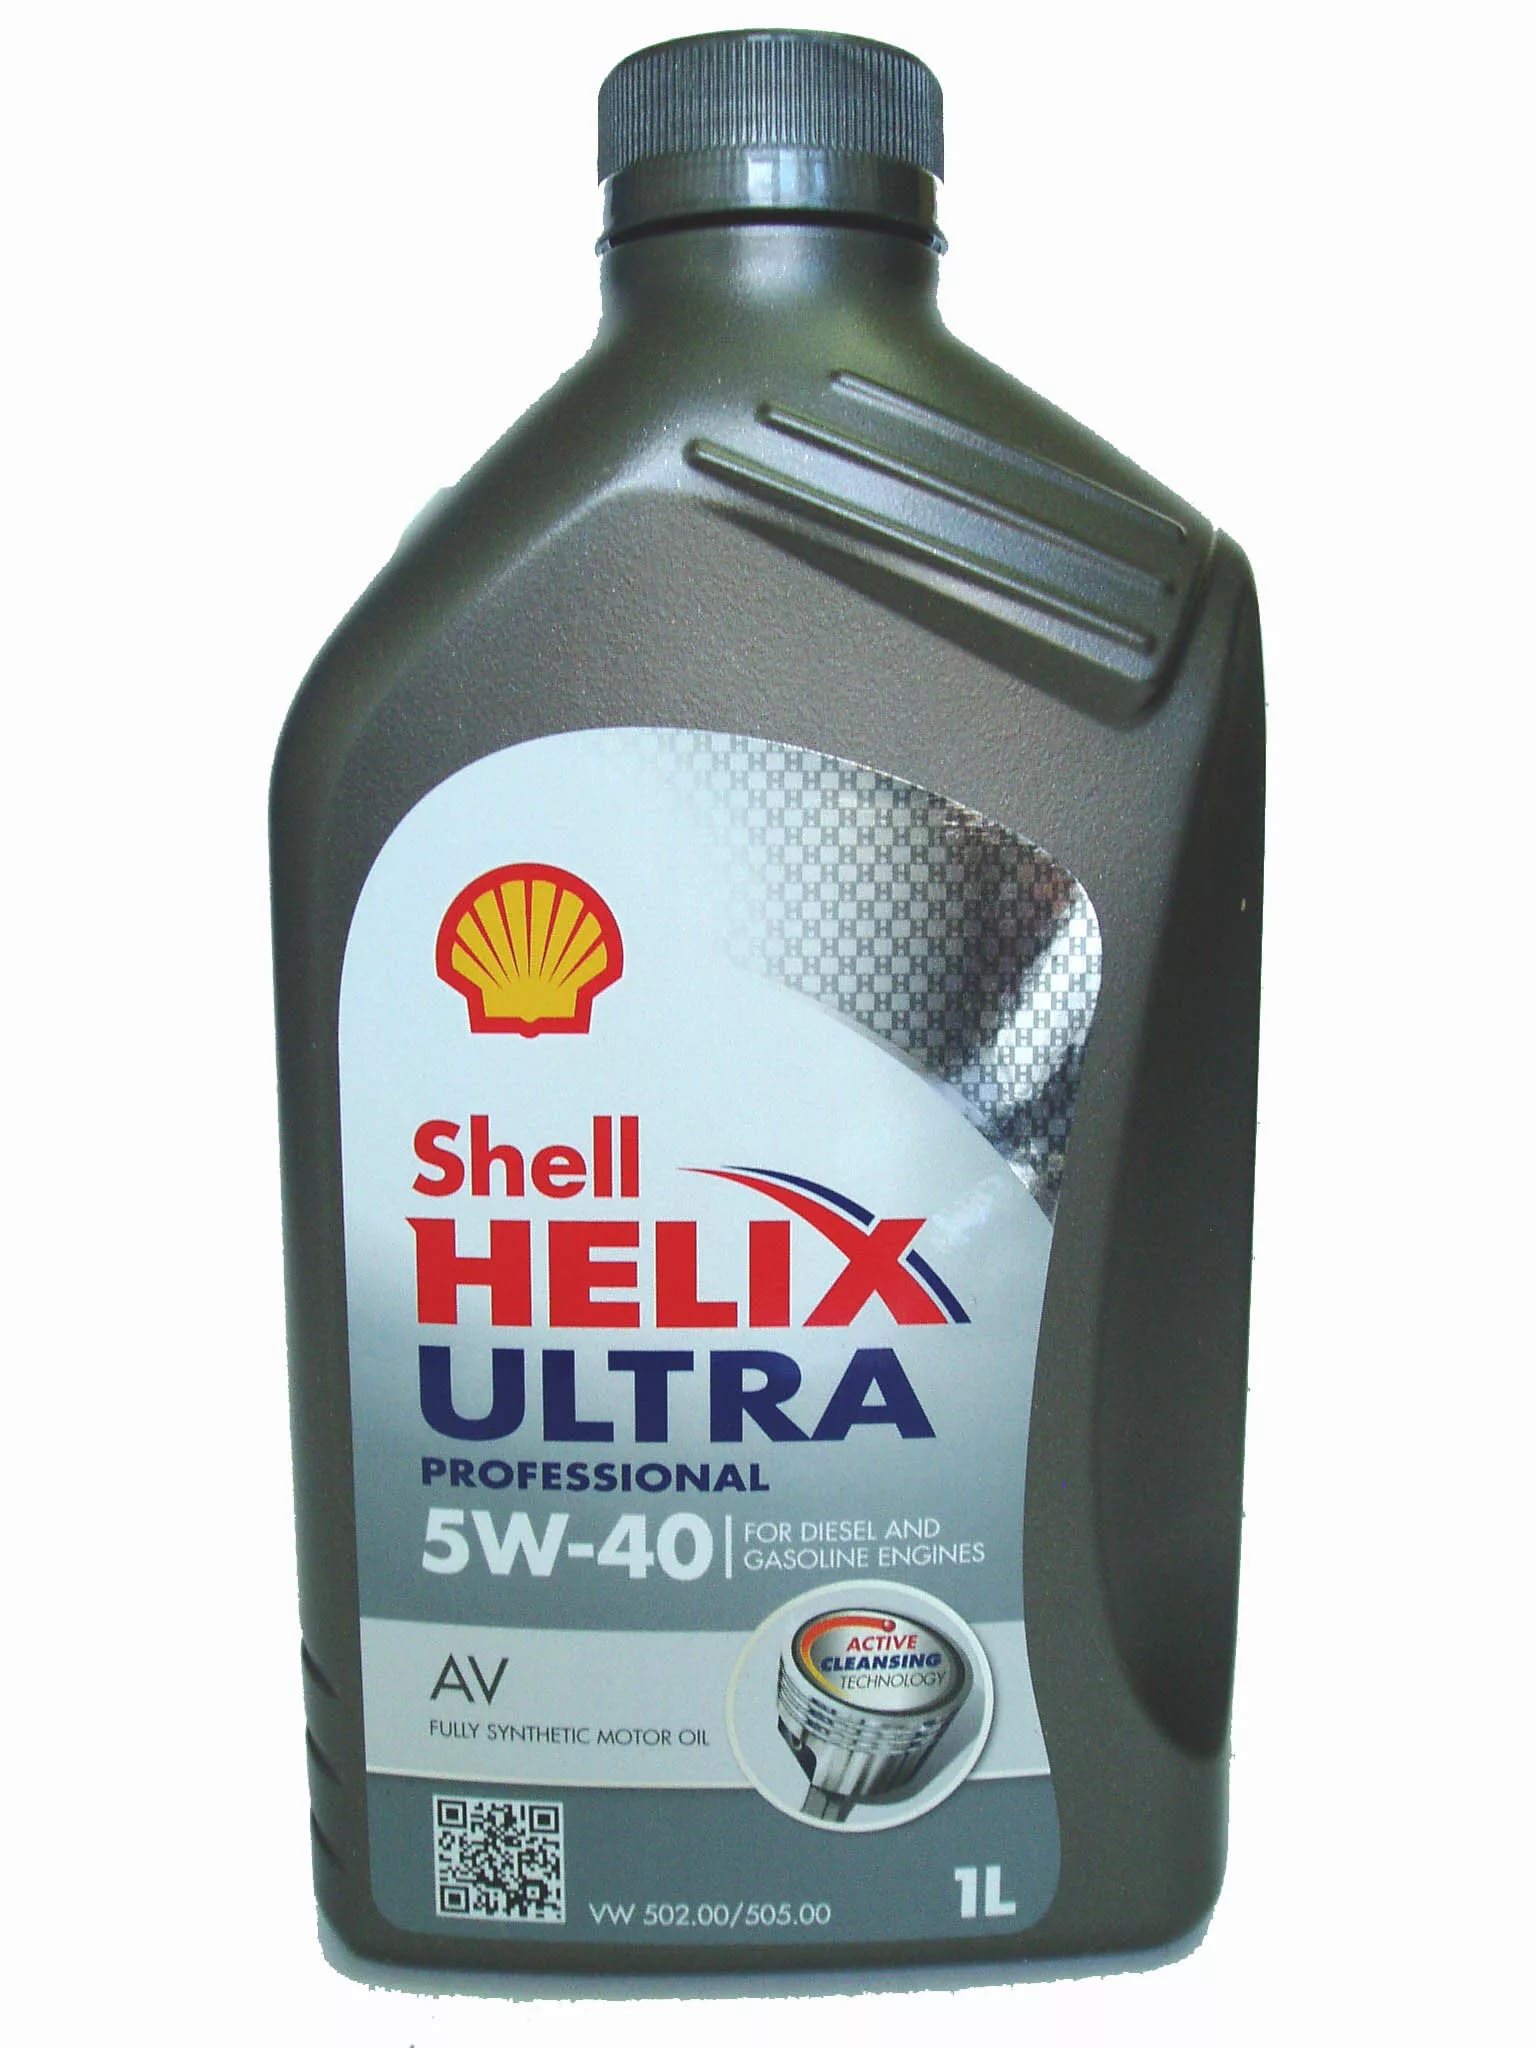 Shell helix av. Shell Helix Ultra professional av 5w-40 4л. Shell Helix Ultra professional av 5w-40. Shell Helix Ultra professional 5w40. Helix Ultra professional av 5w-40.